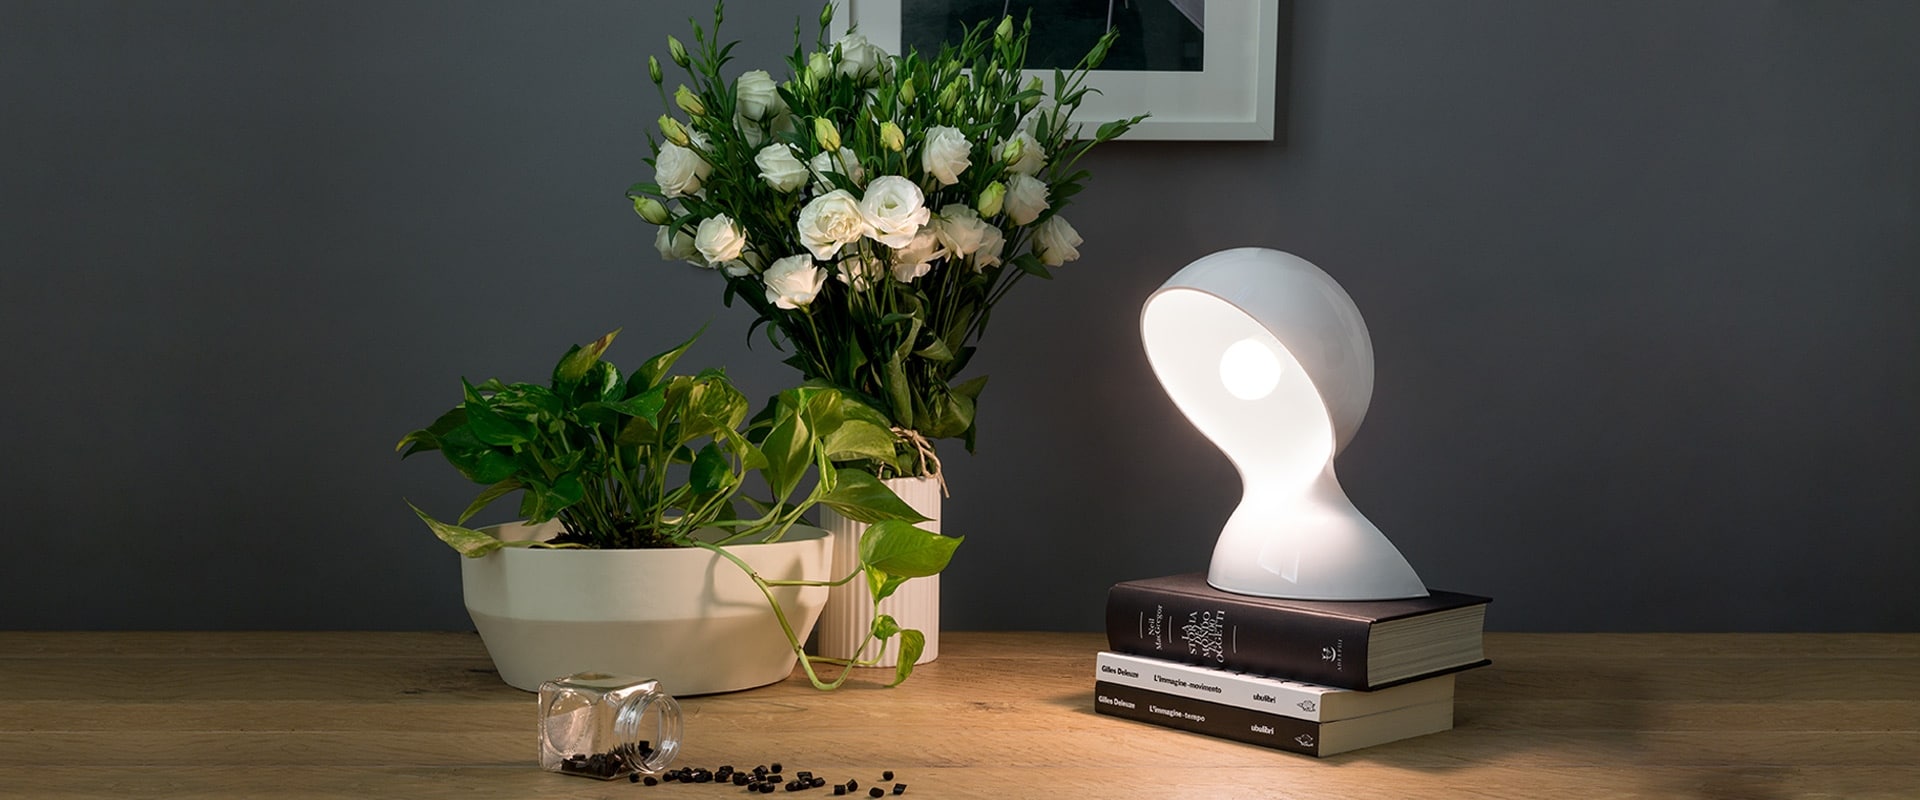 Lampe de table blanche à led Dalu - Petite lampe de table design 2800 Kelvin